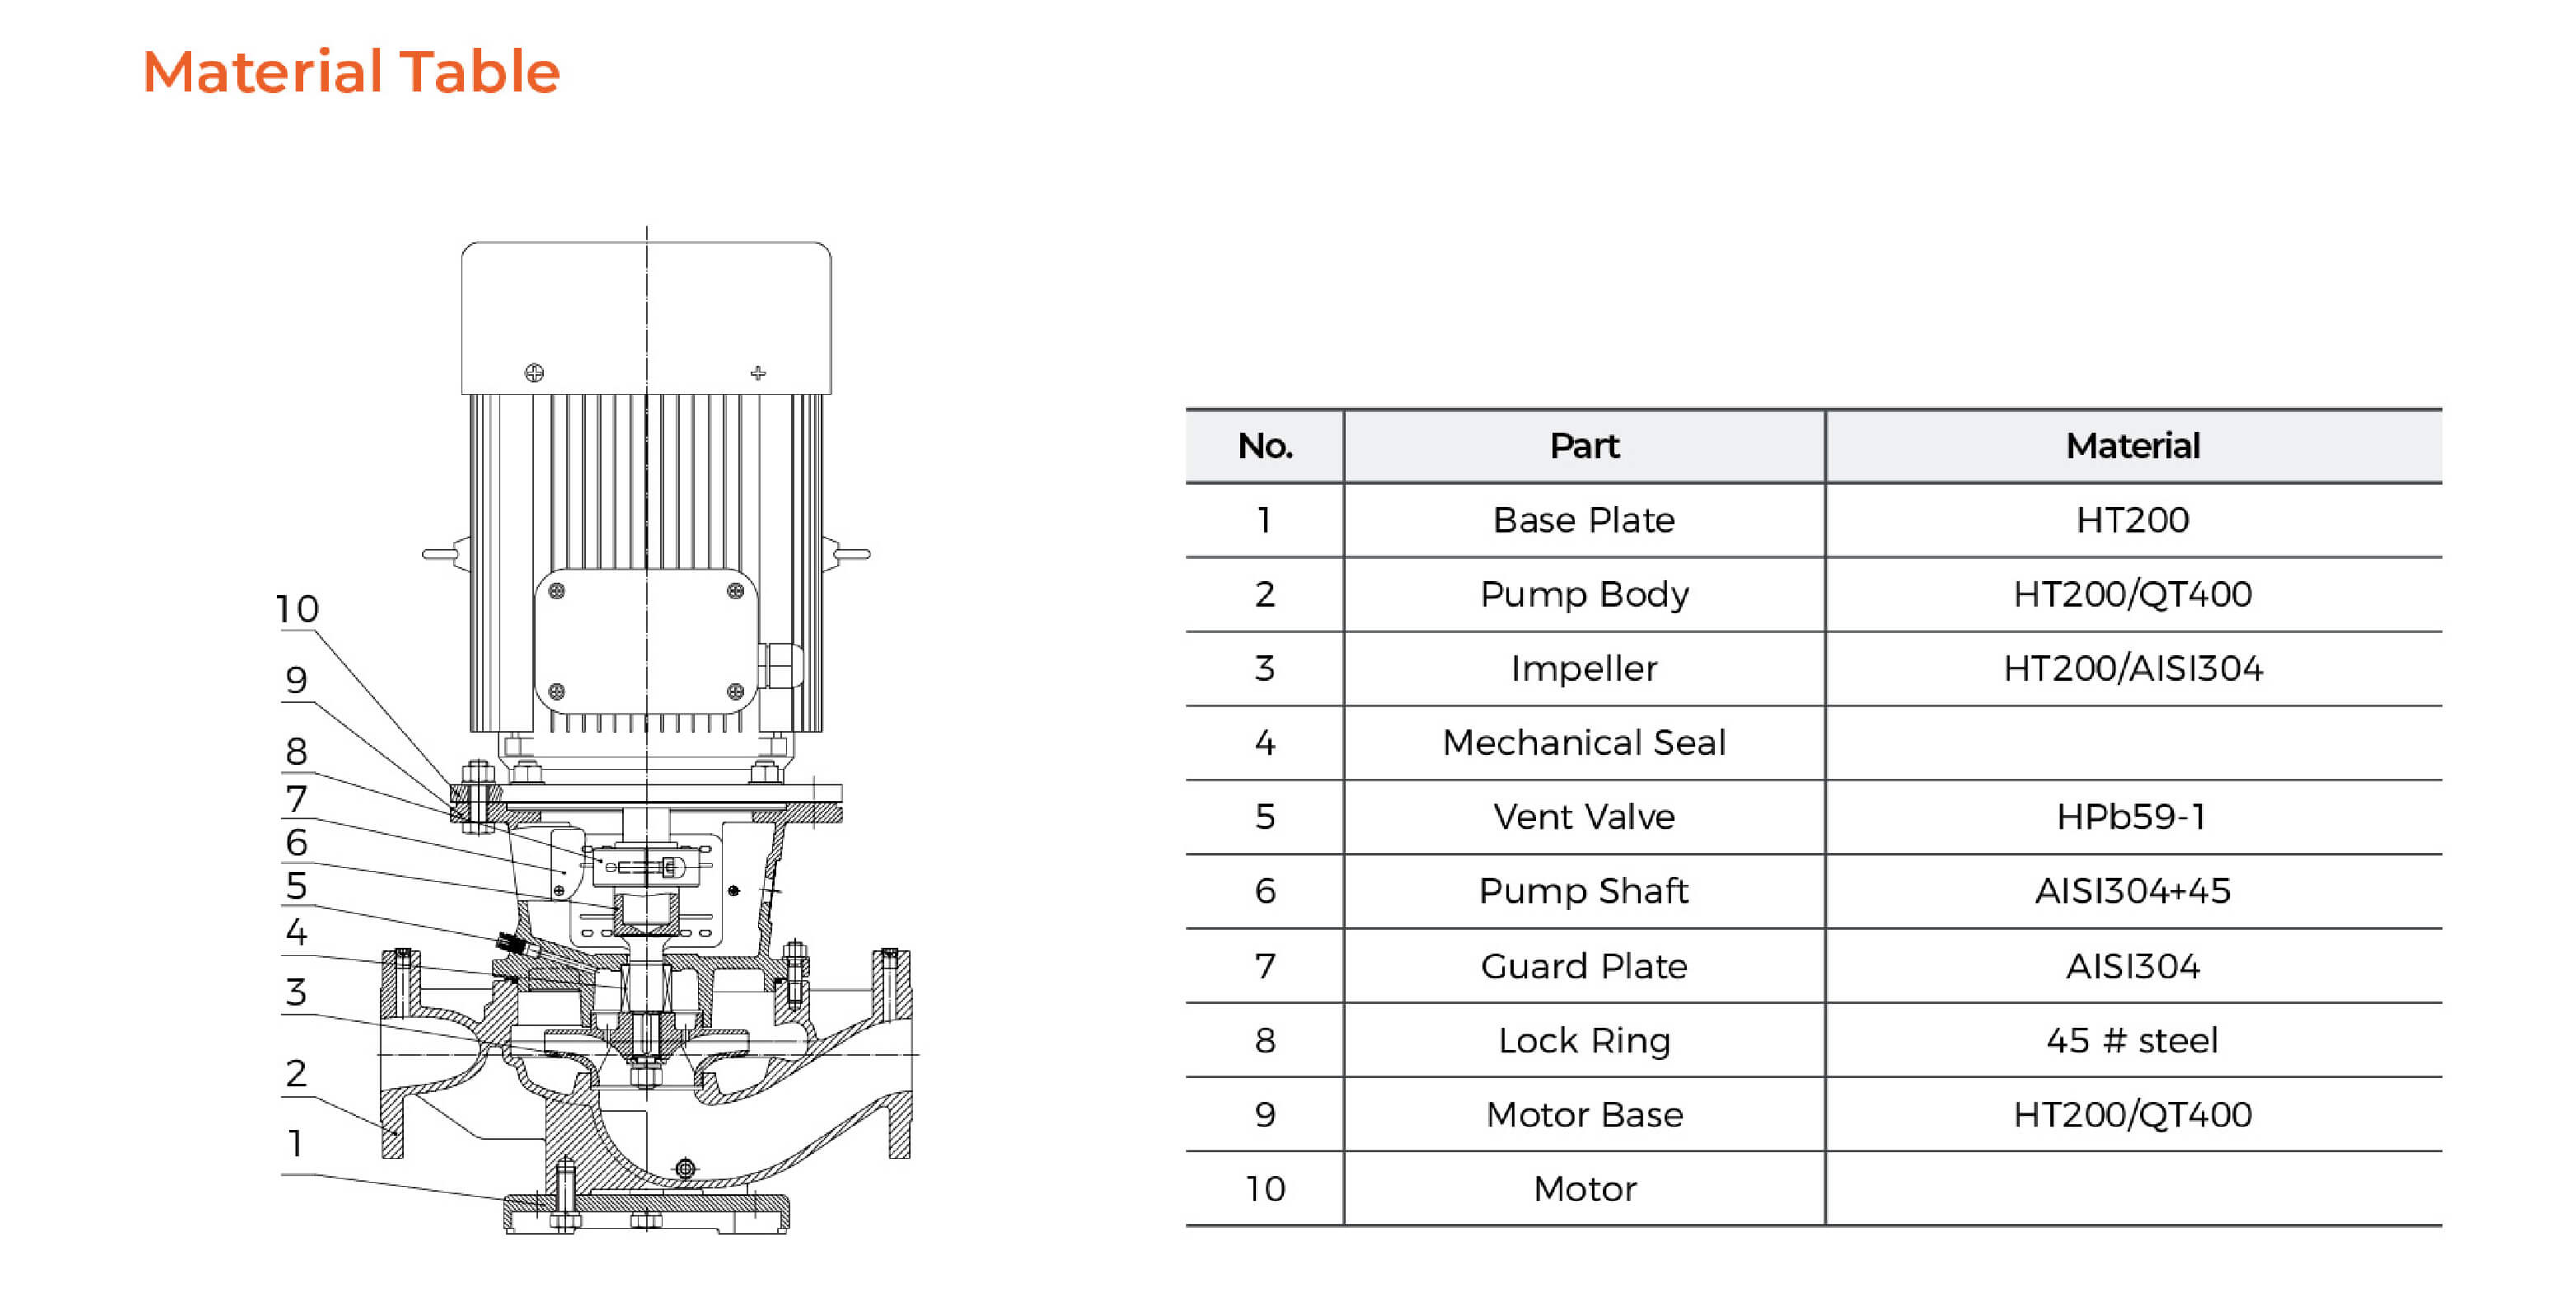 LPP Vertical In-line Pump Material Table